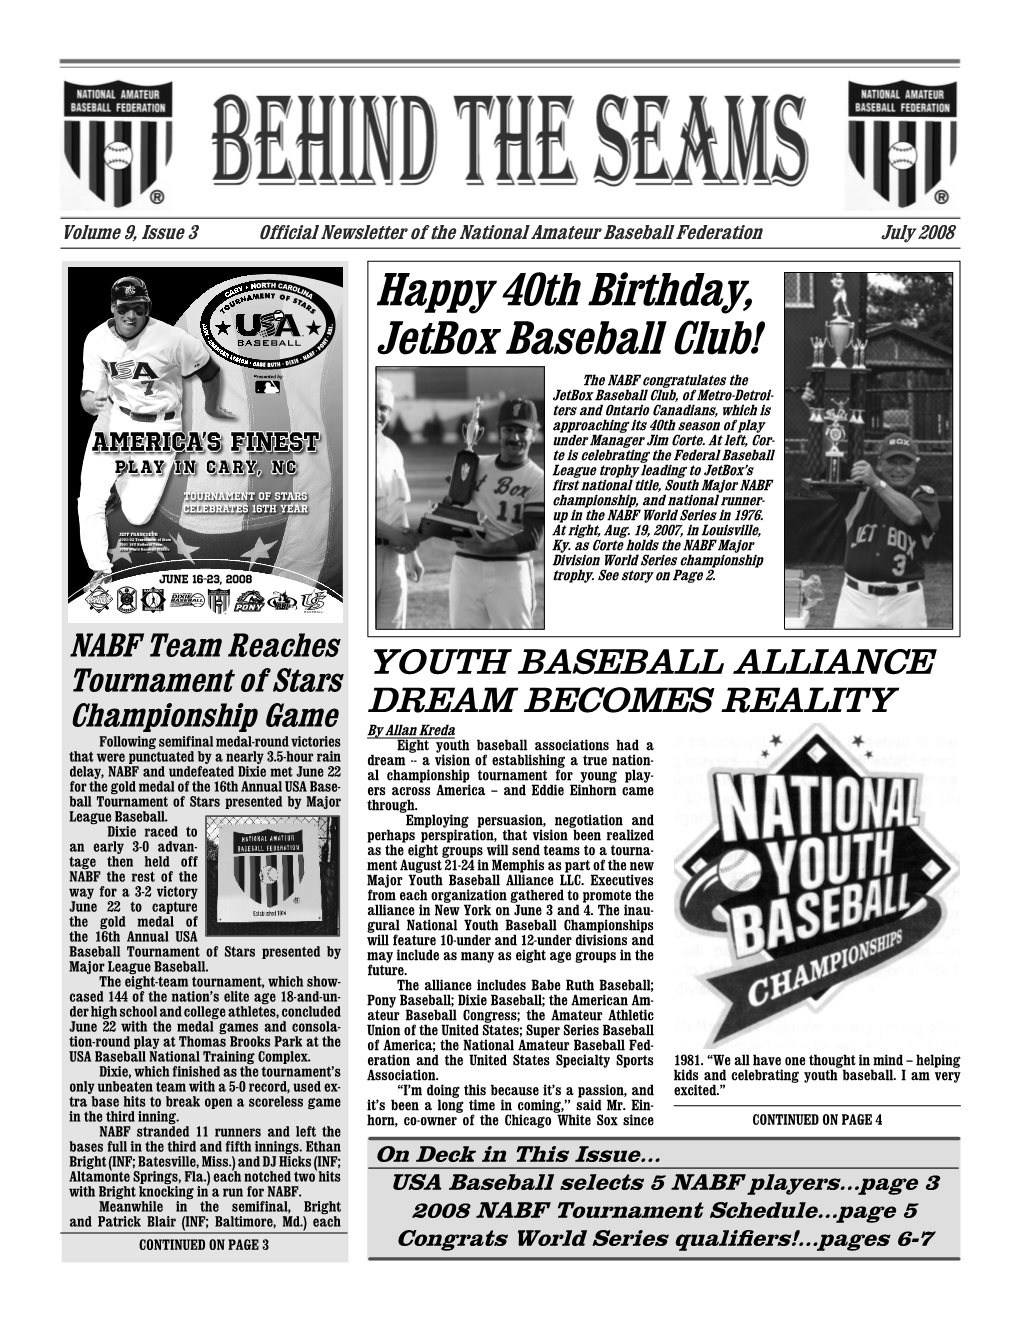 Happy 40Th Birthday, Jetbox Baseball Club!